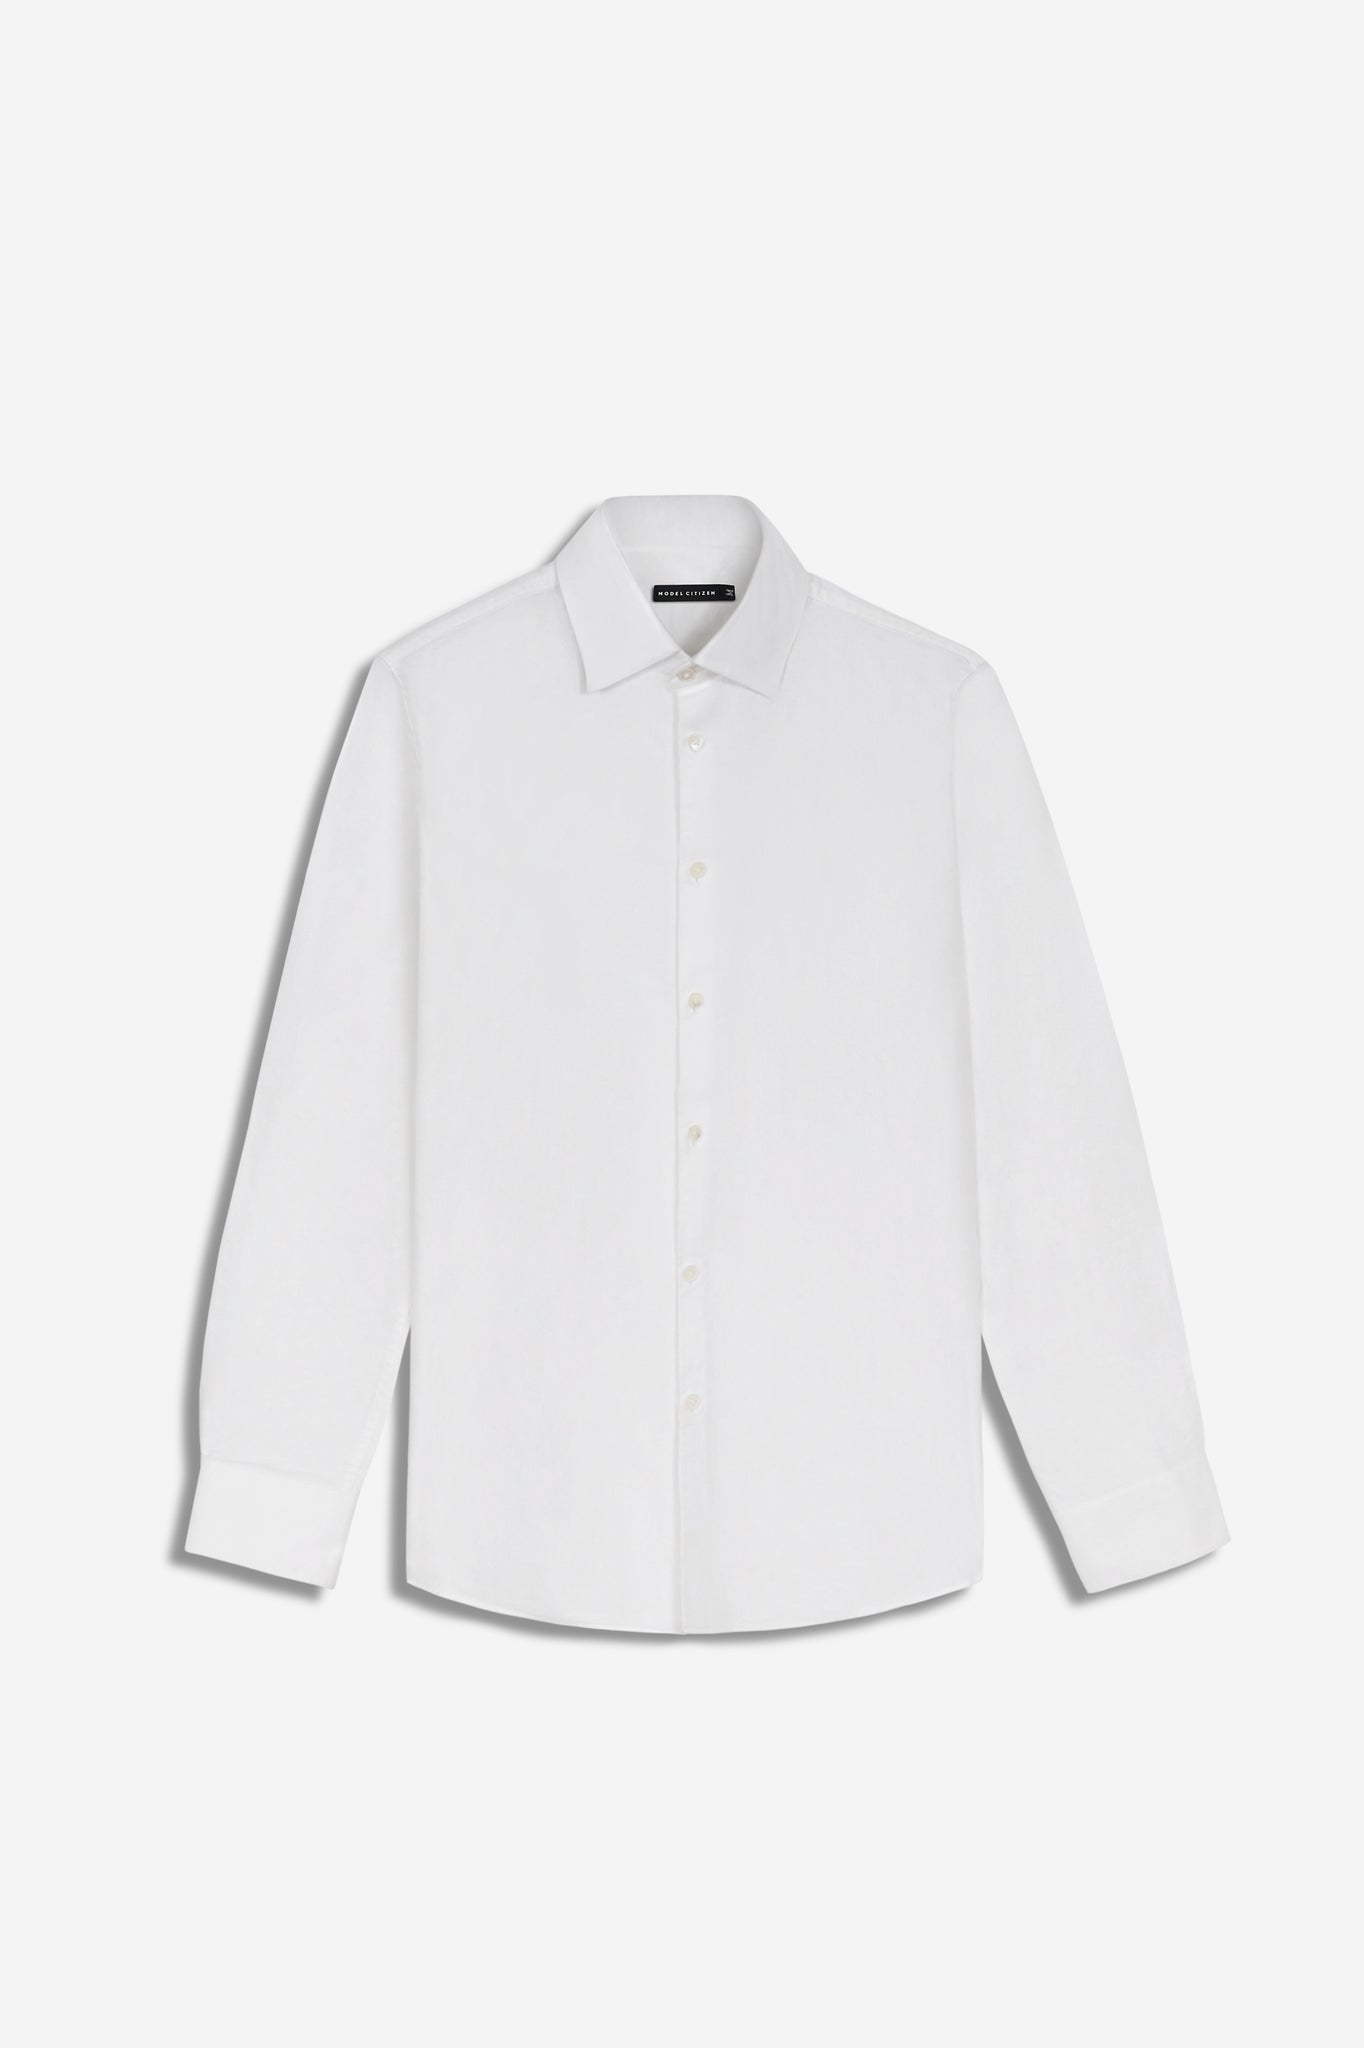 Formal White Oxford Shirt